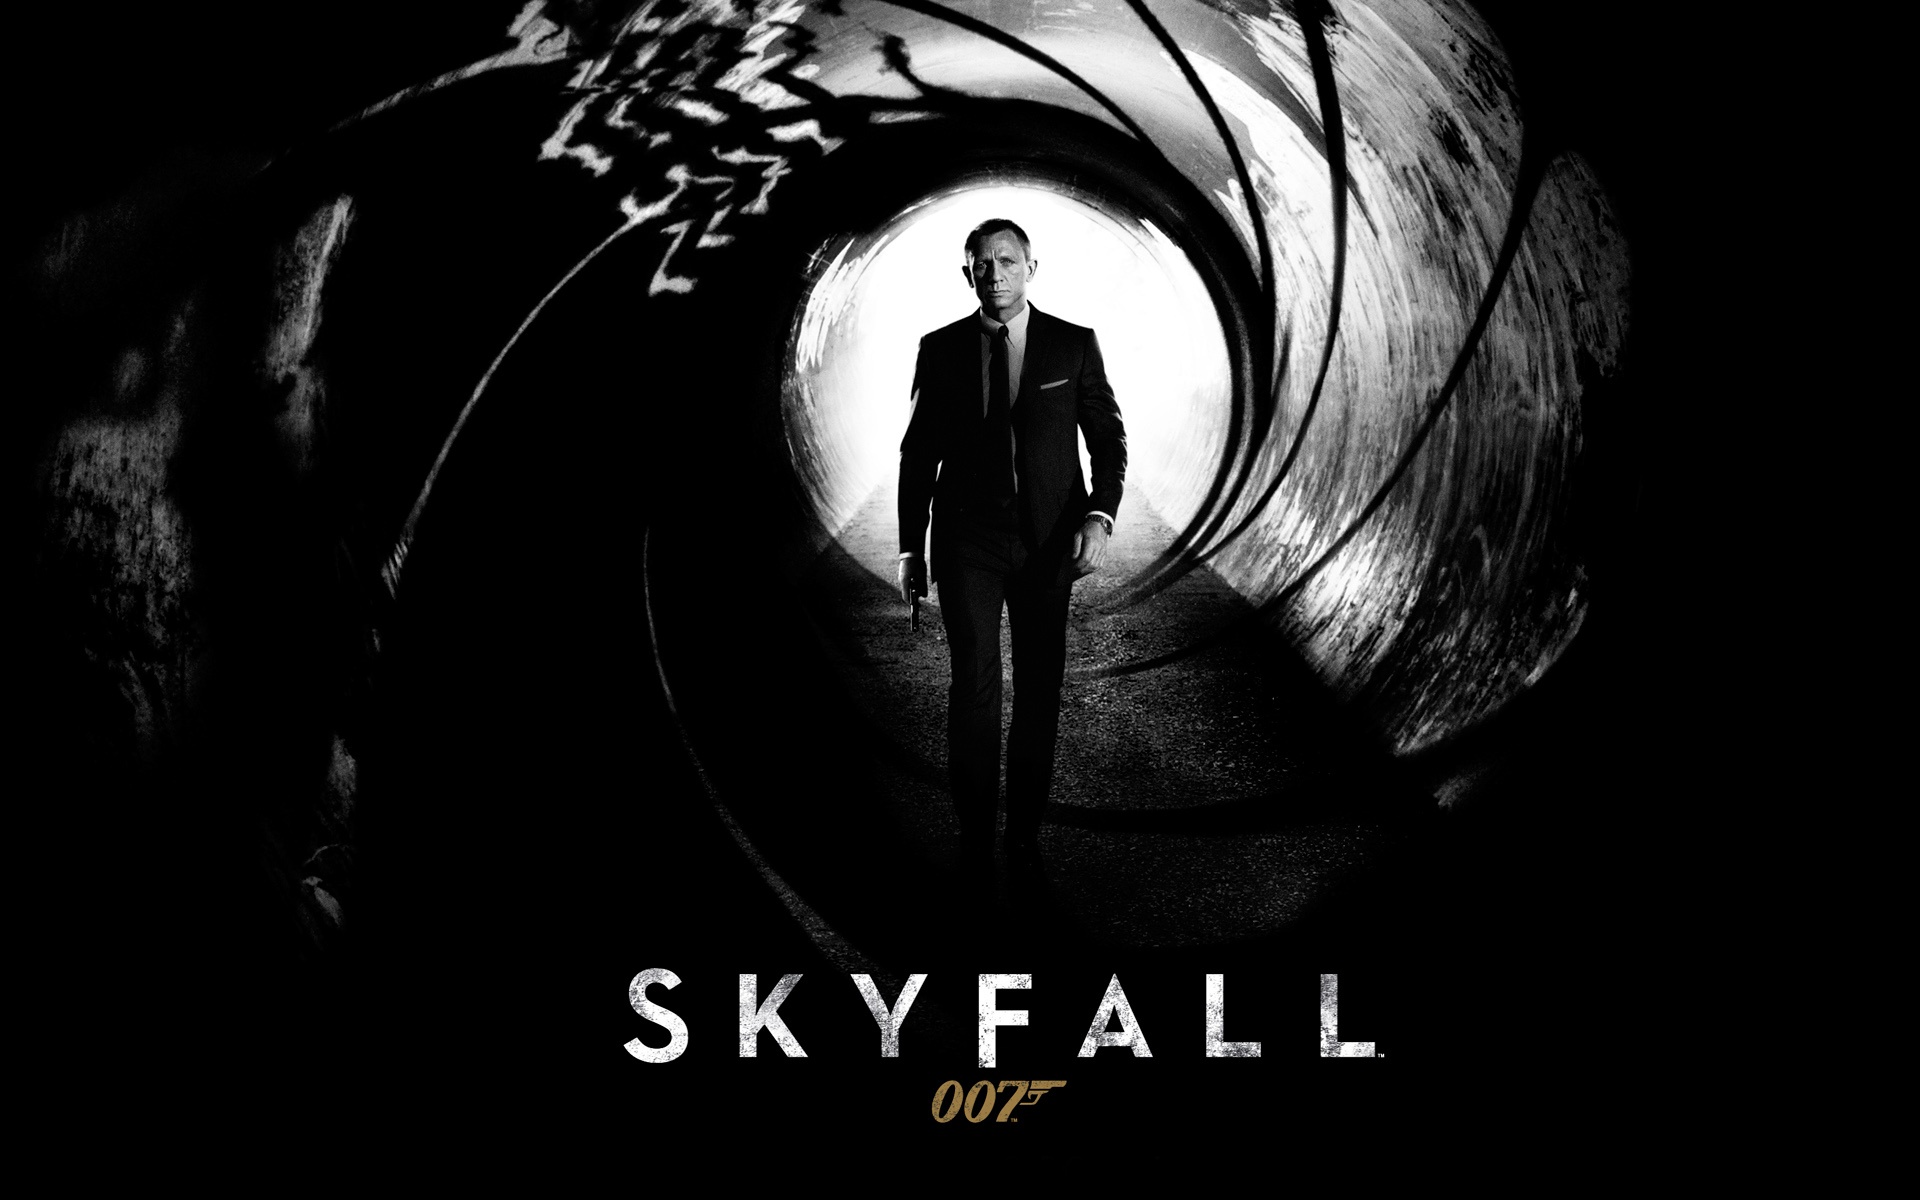 James Bond Skyfall Wallpaper HD In Pixels